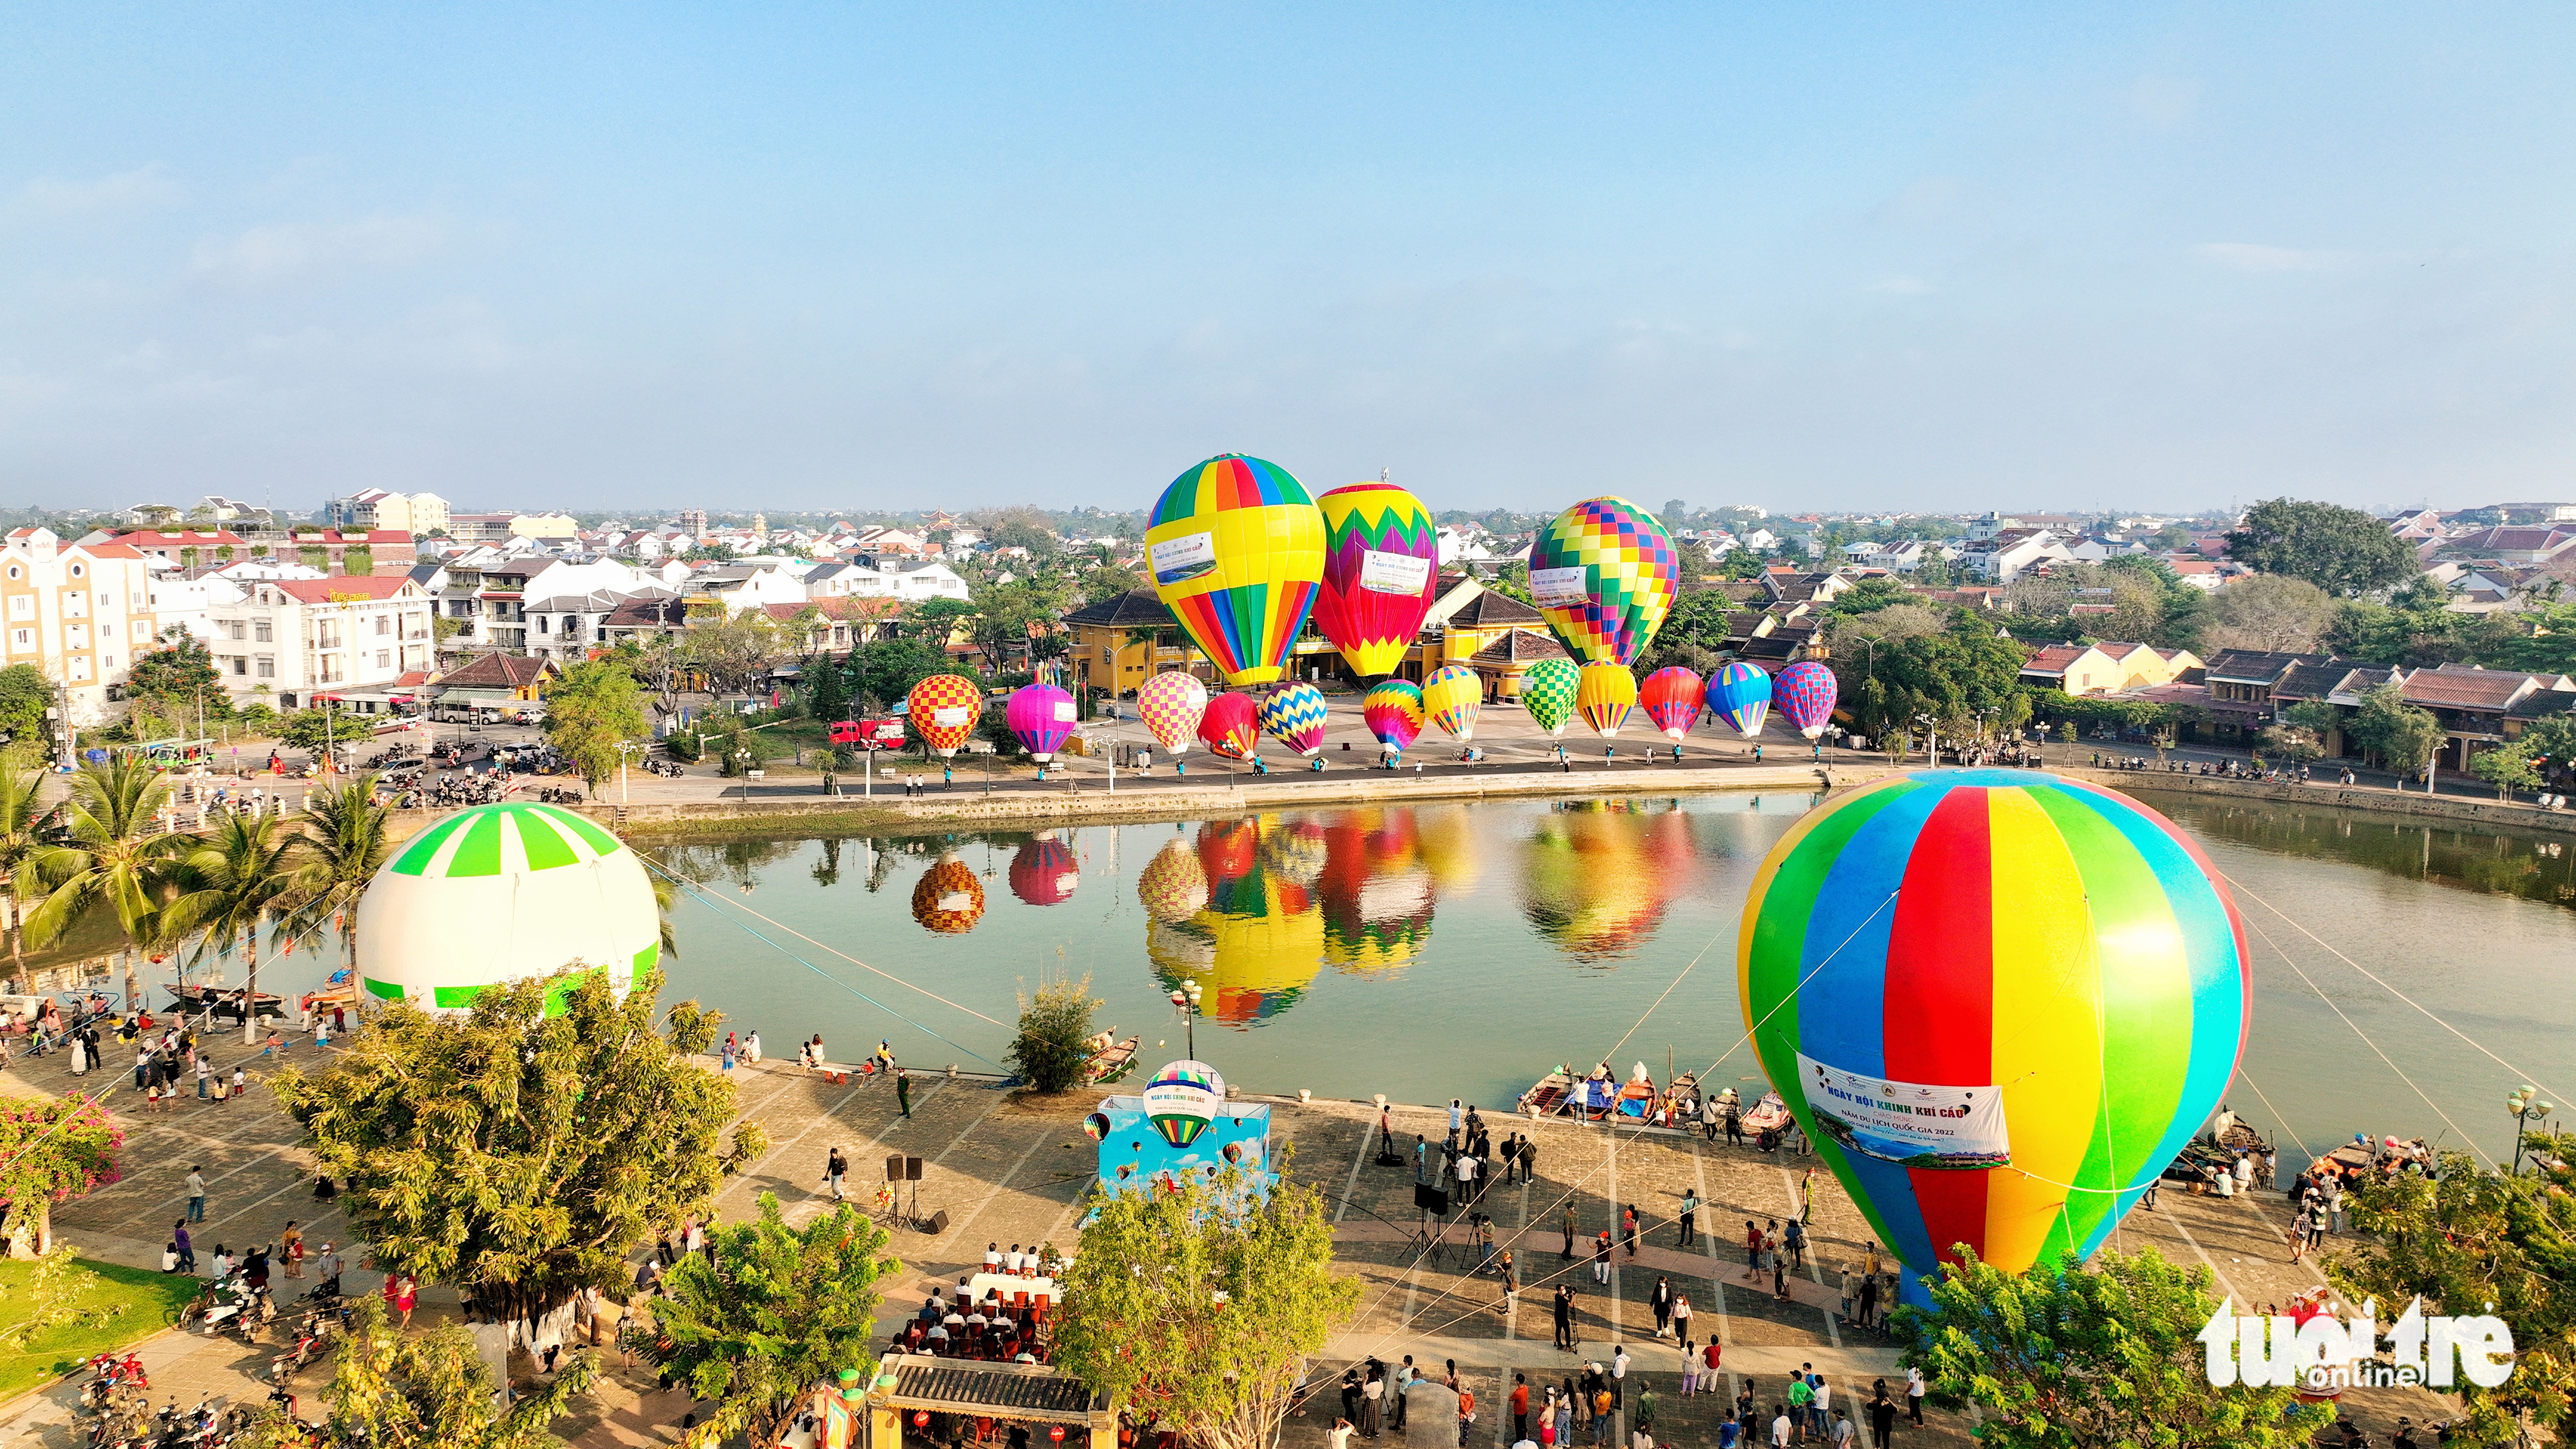 Hot-air balloons illuminate the sky above Hoi An's tourism festival